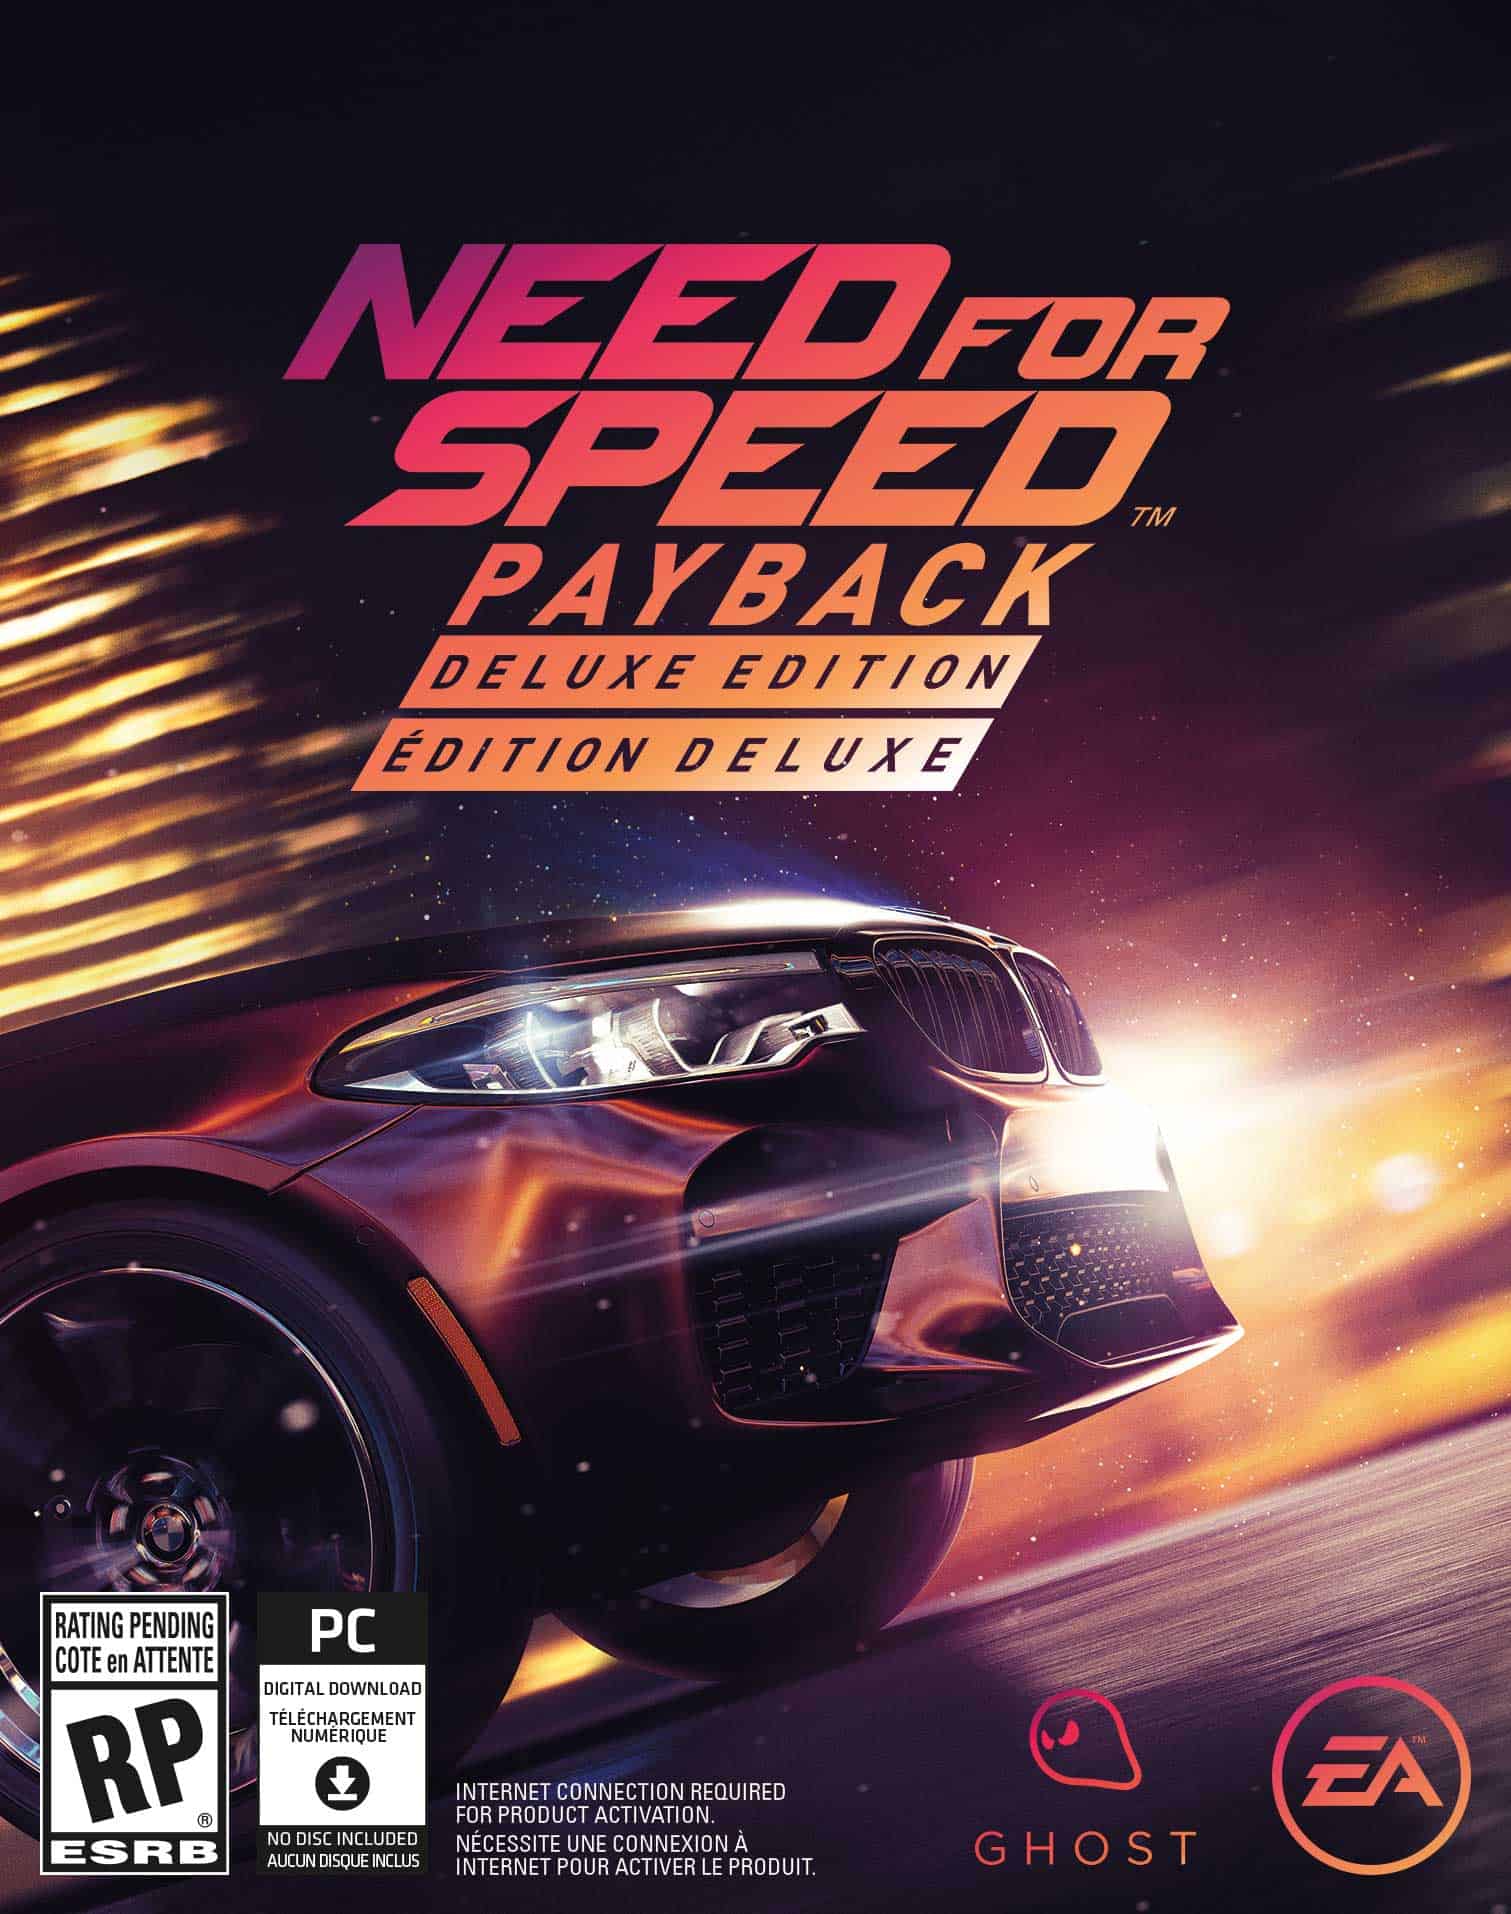 Kan ikke ankomst Artifact PC Need for Speed: Payback SaveGame 100% - Save File Download